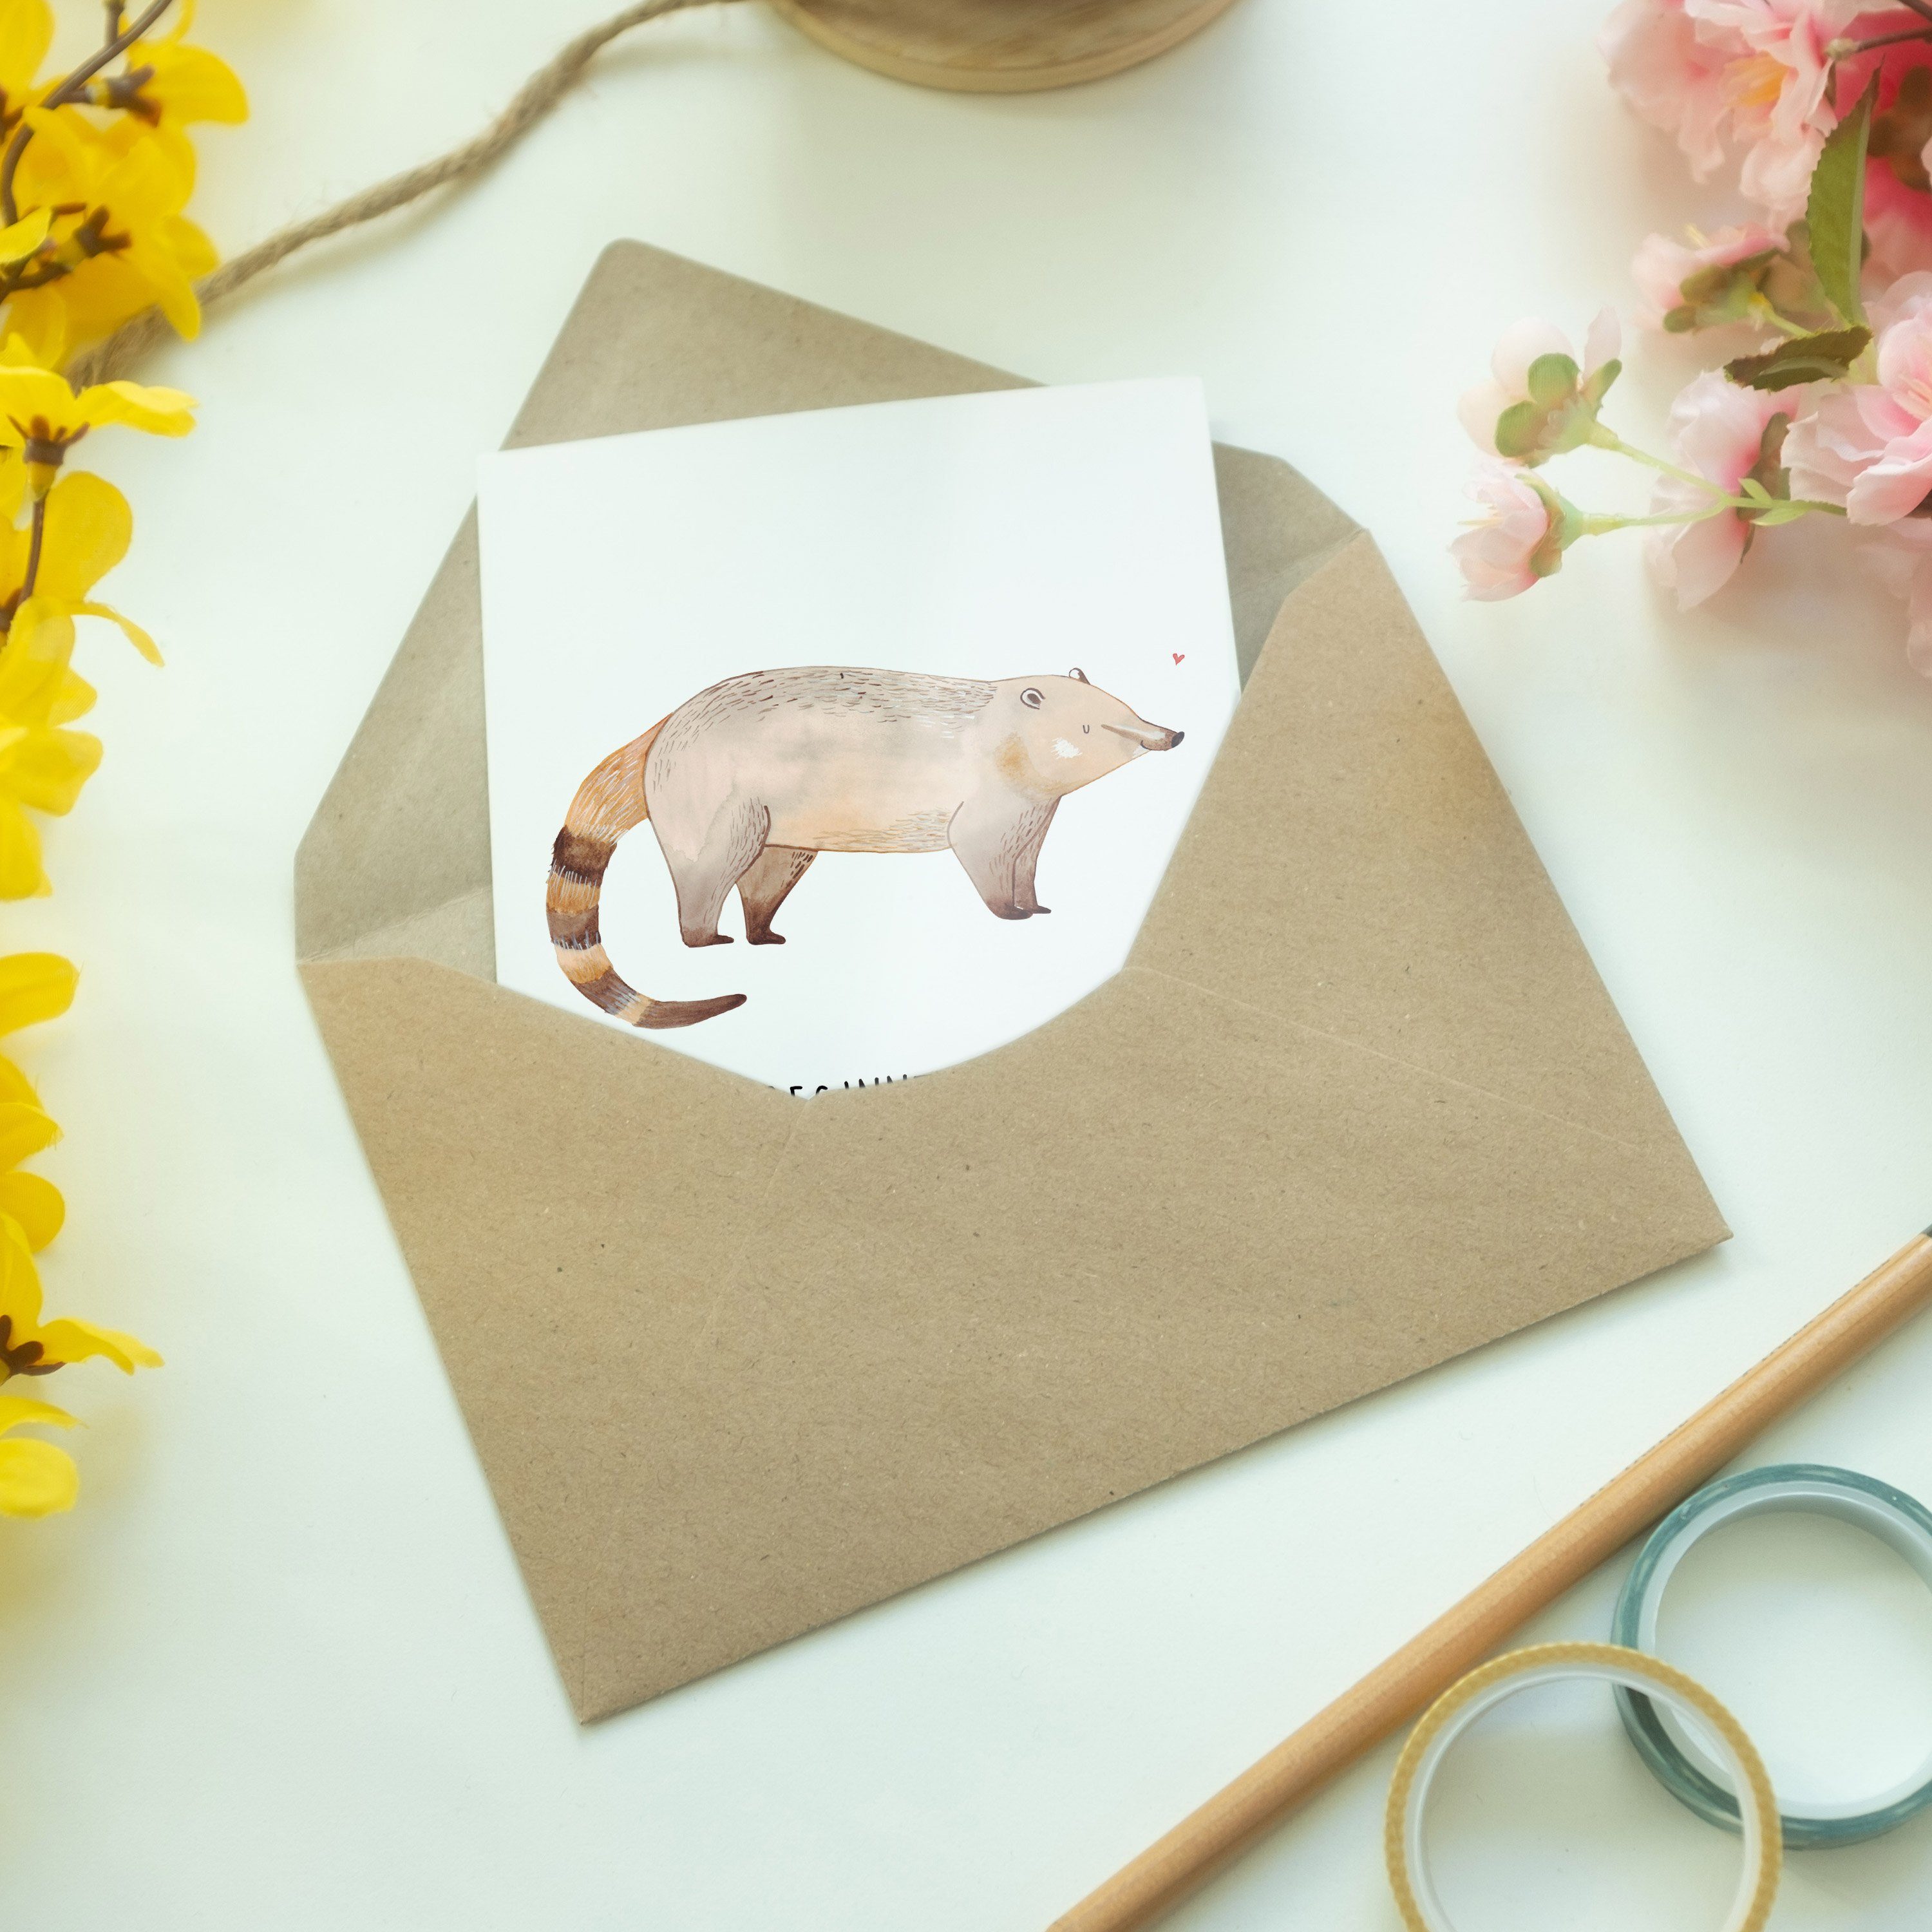 - Mrs. Mr. & - Rüsselbär, Grußkarte Tiermotive Weiß Geschenk, Nasenbaer Einladungskarte, Panda